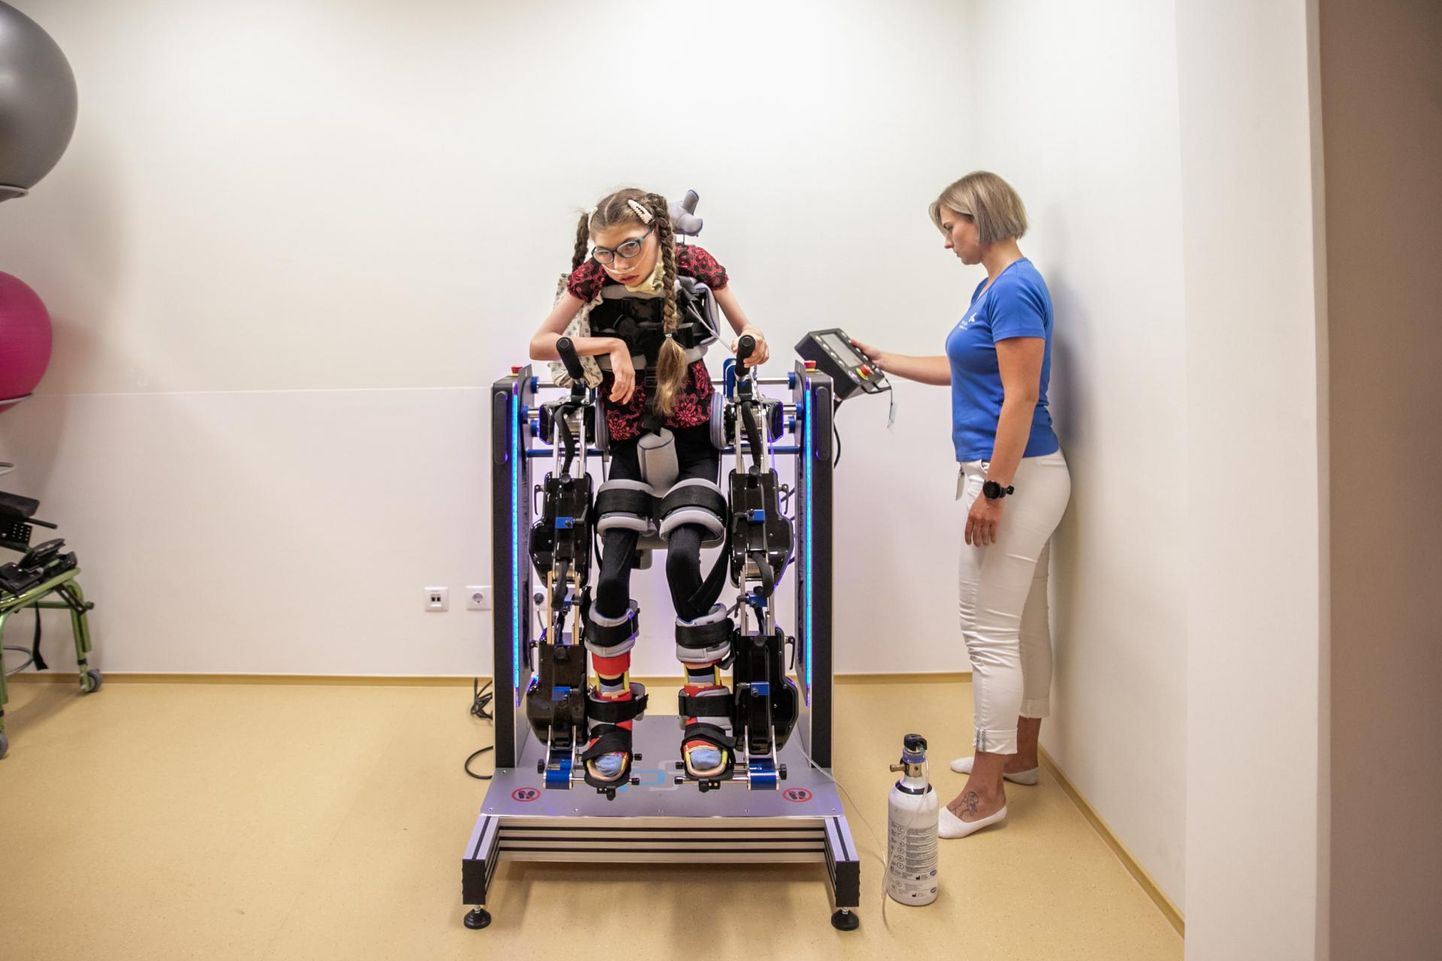 Kelli füsioterapeut Jaanika Kukk nentis, et kõnnirobot teeb tema töö tunduvalt lihtsamaks.